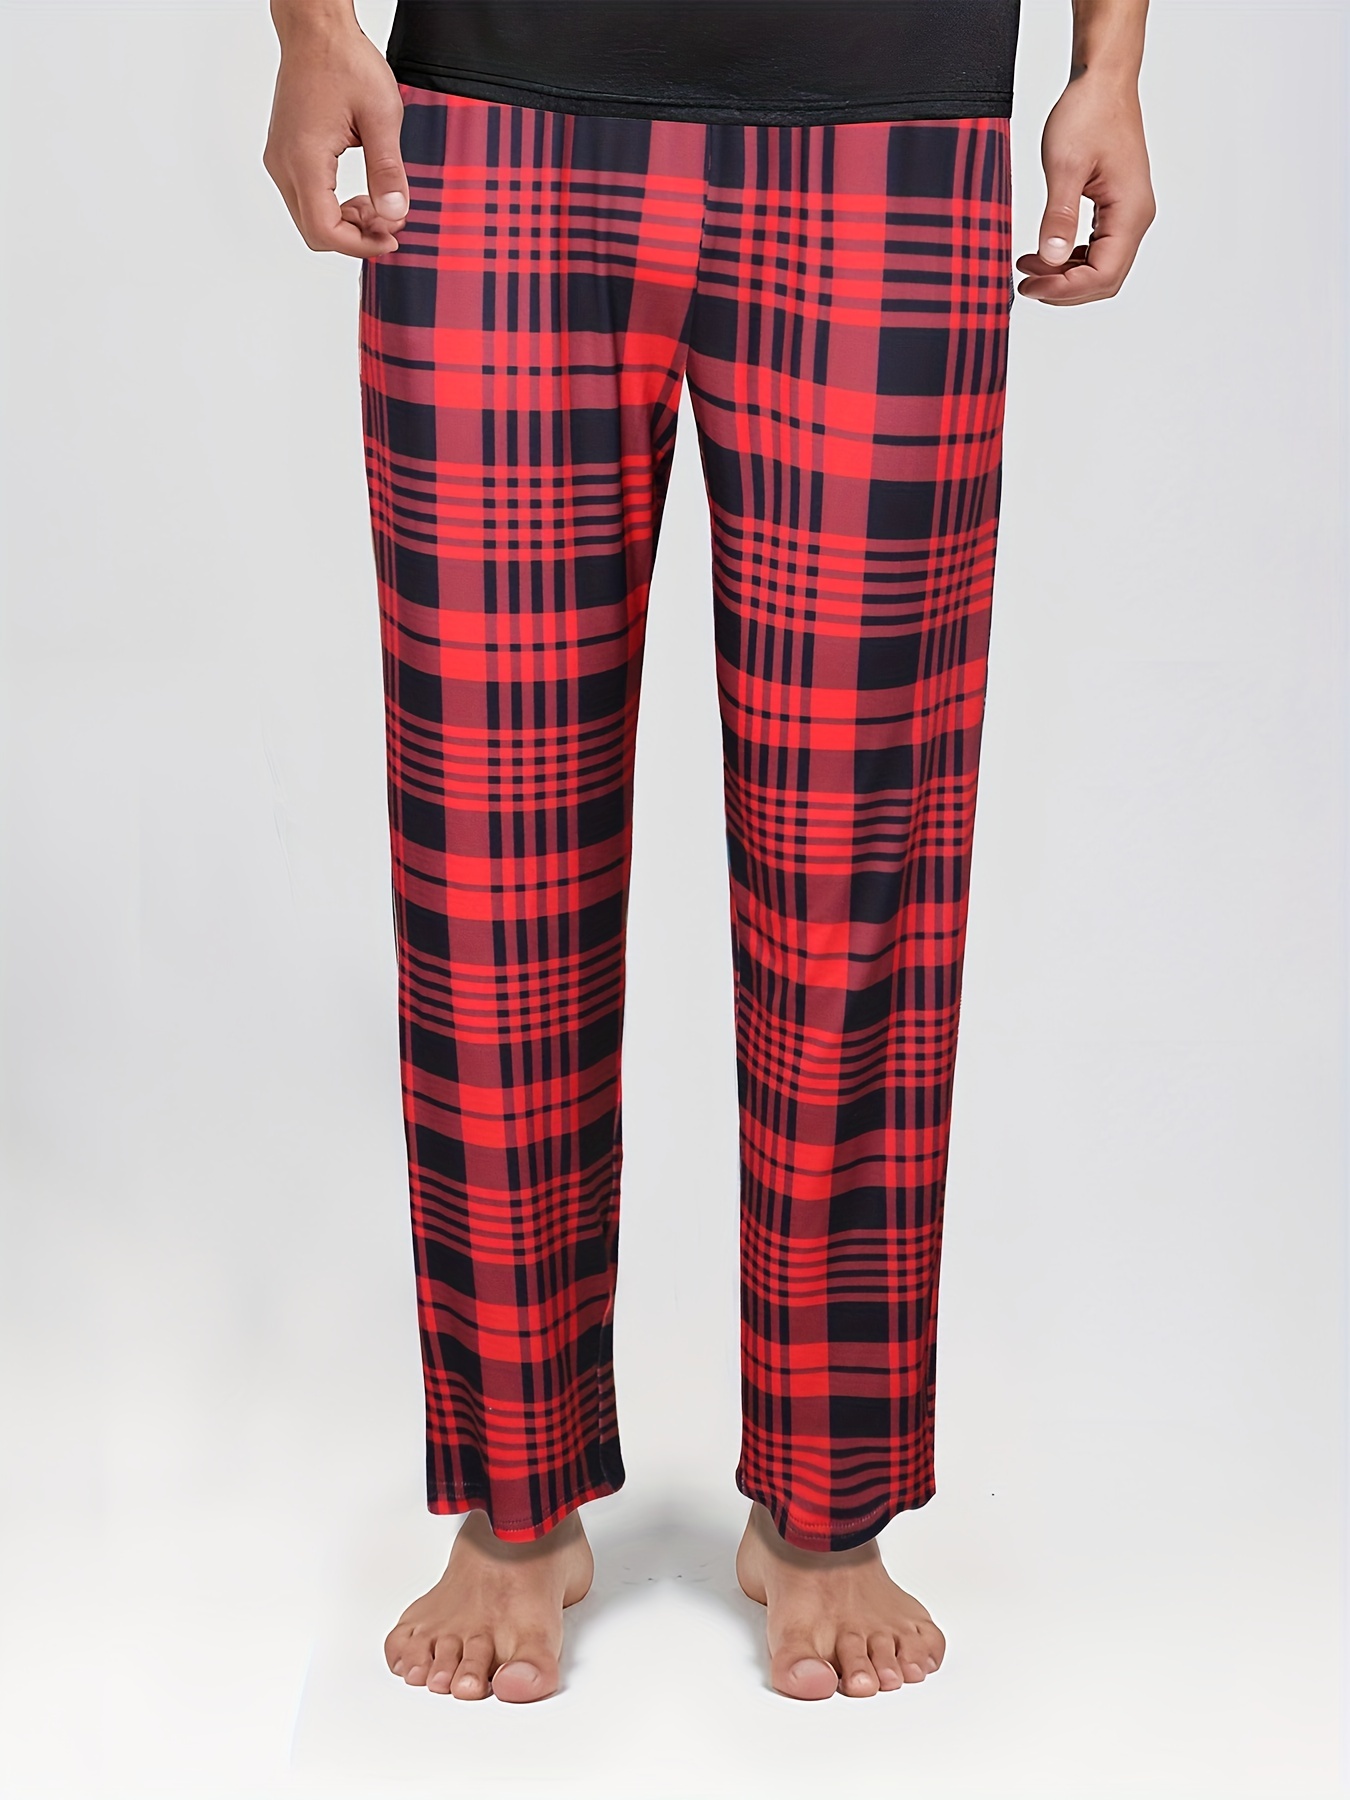 Ladies Classic Plaid Pajama Pants | buffaloveapparel